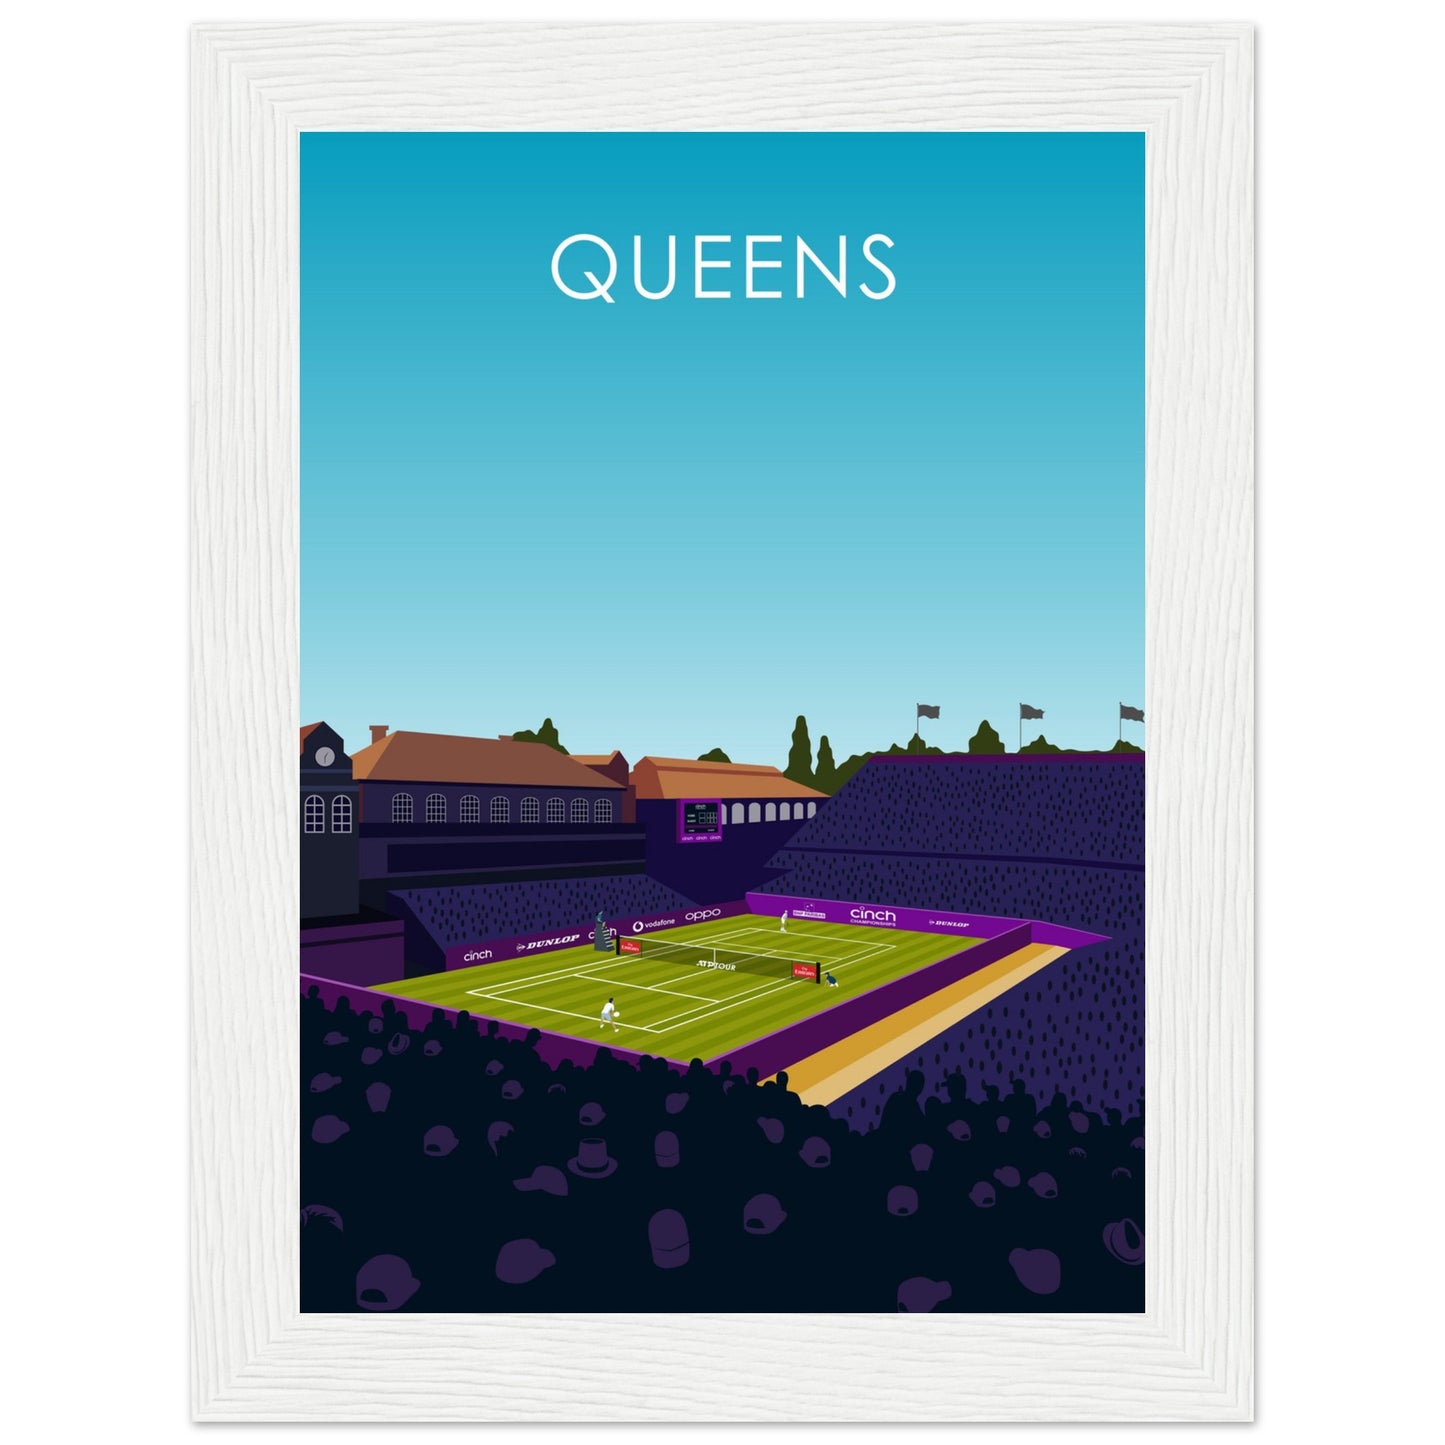 Queens Club Centre Court Cinch Championships Tennis Poster